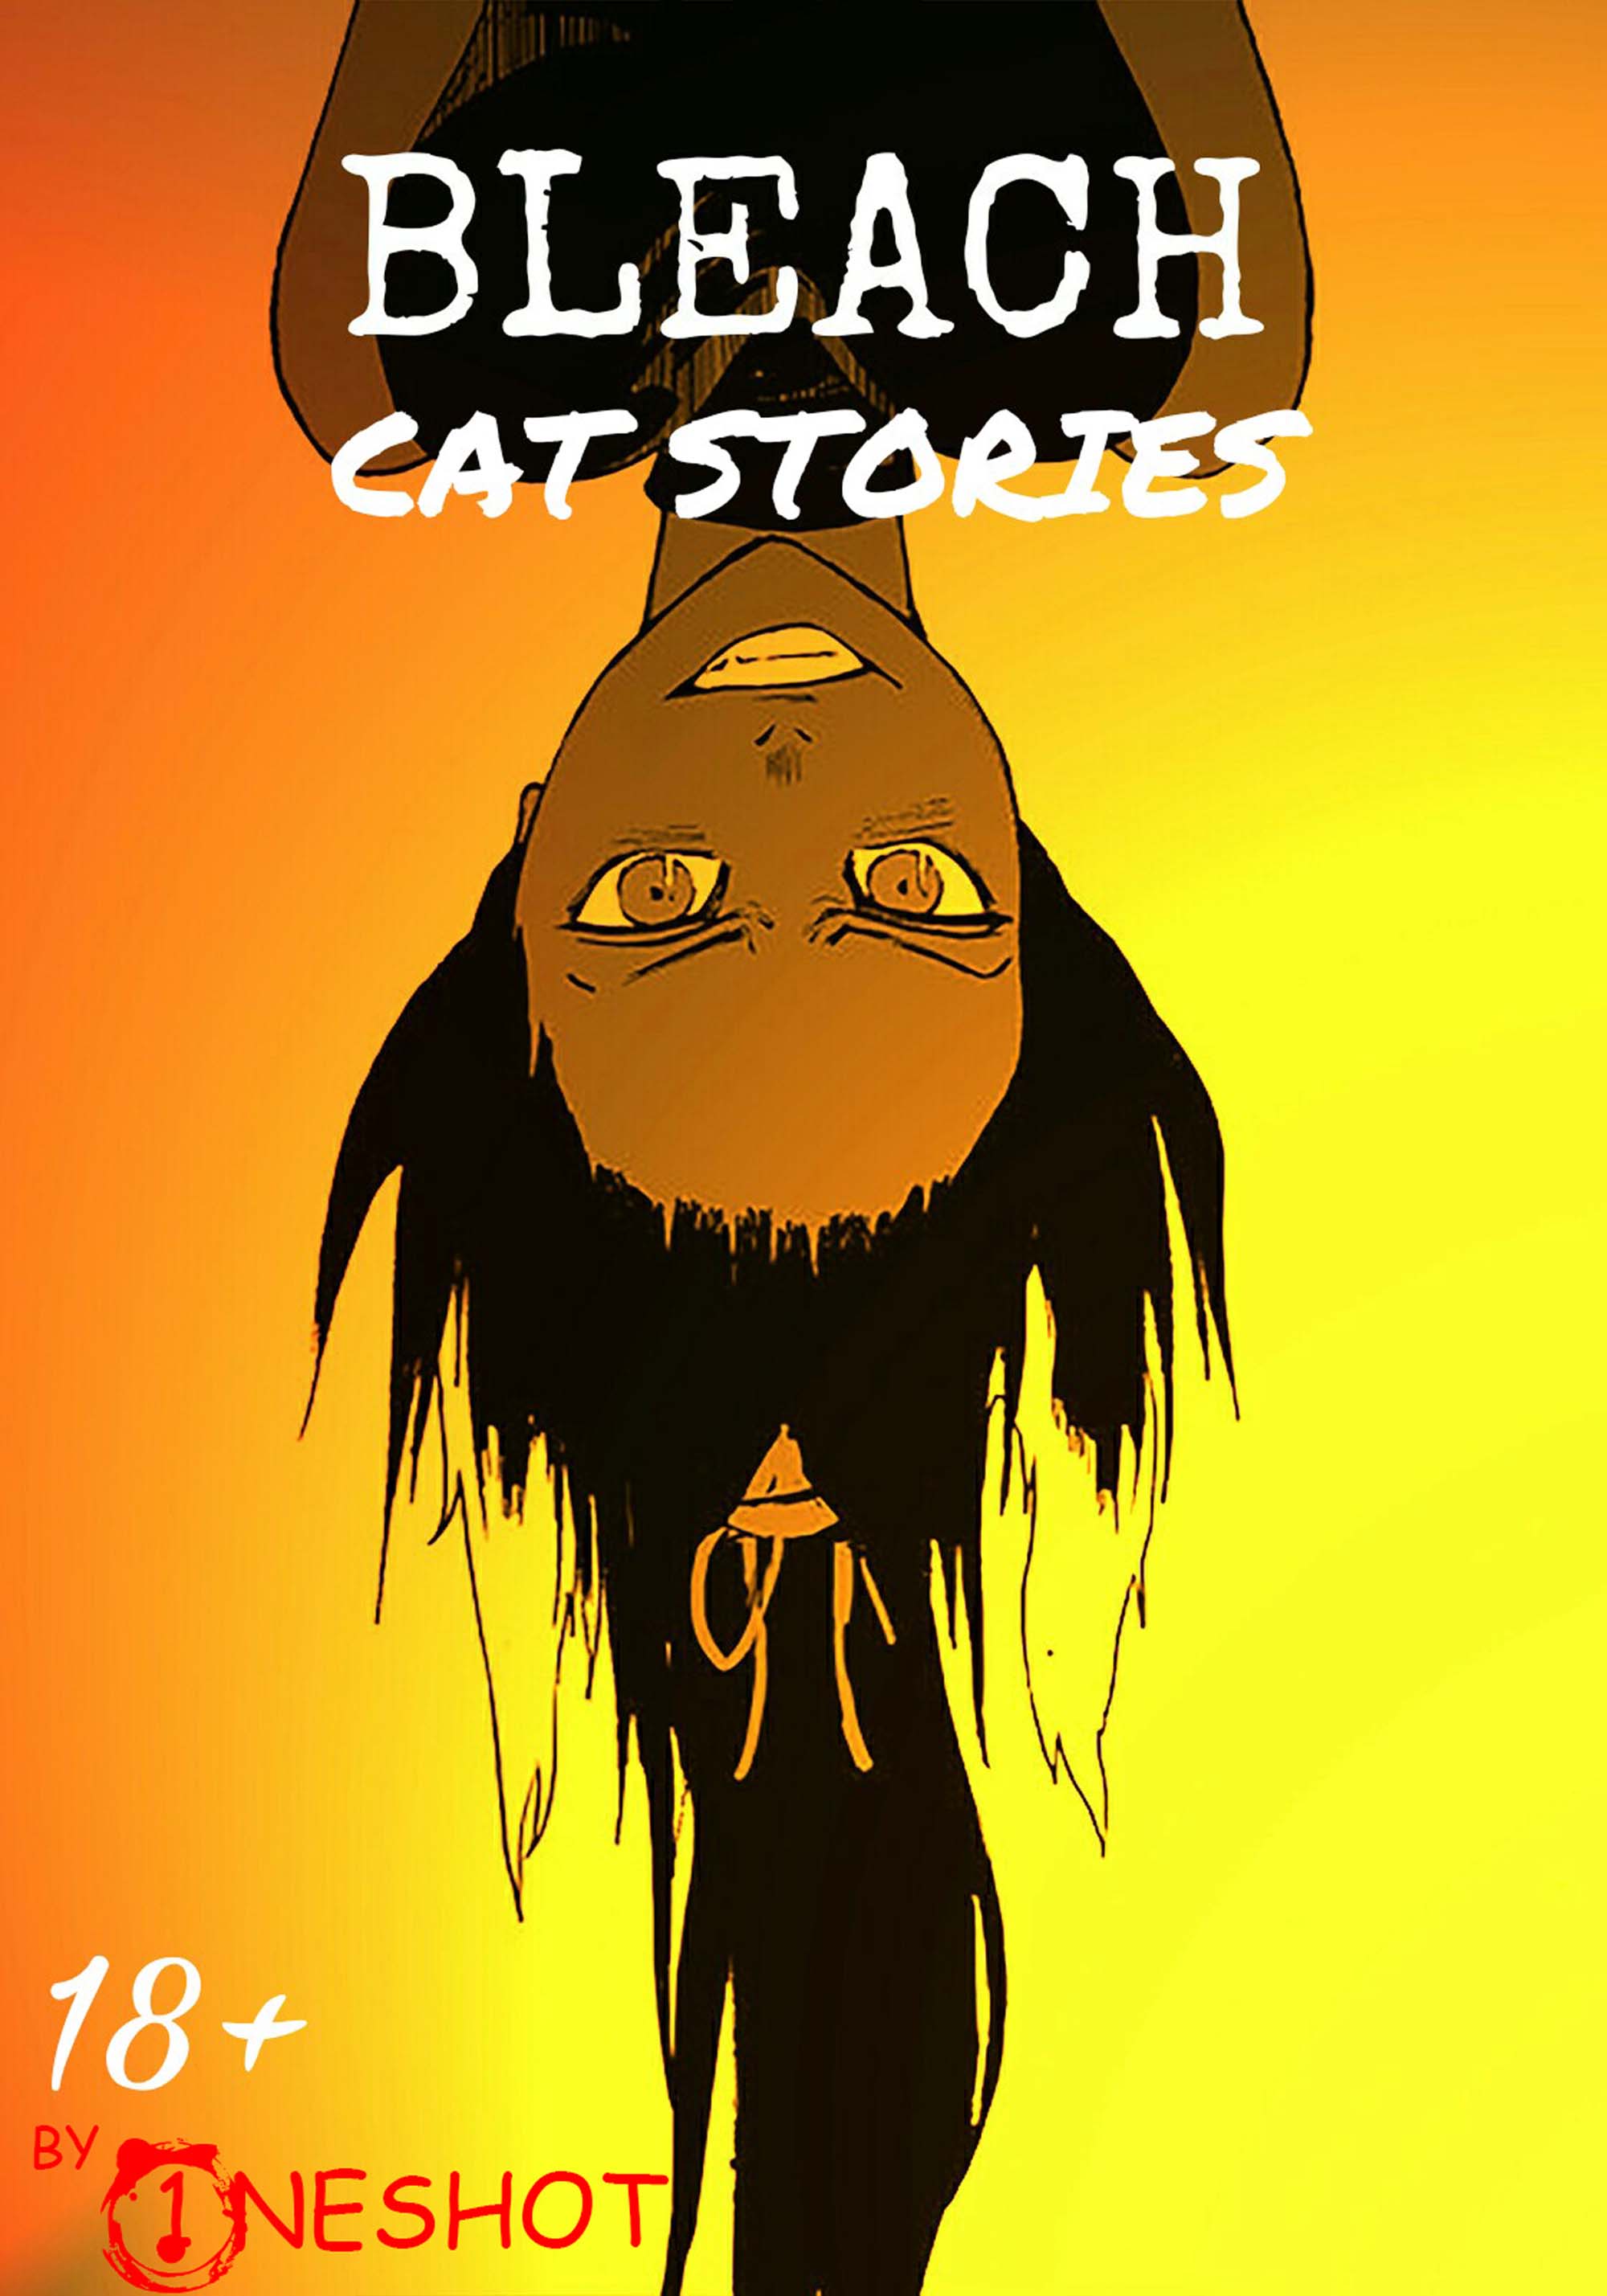 BLEACH Cat stories by Oneshot Hentai Comics